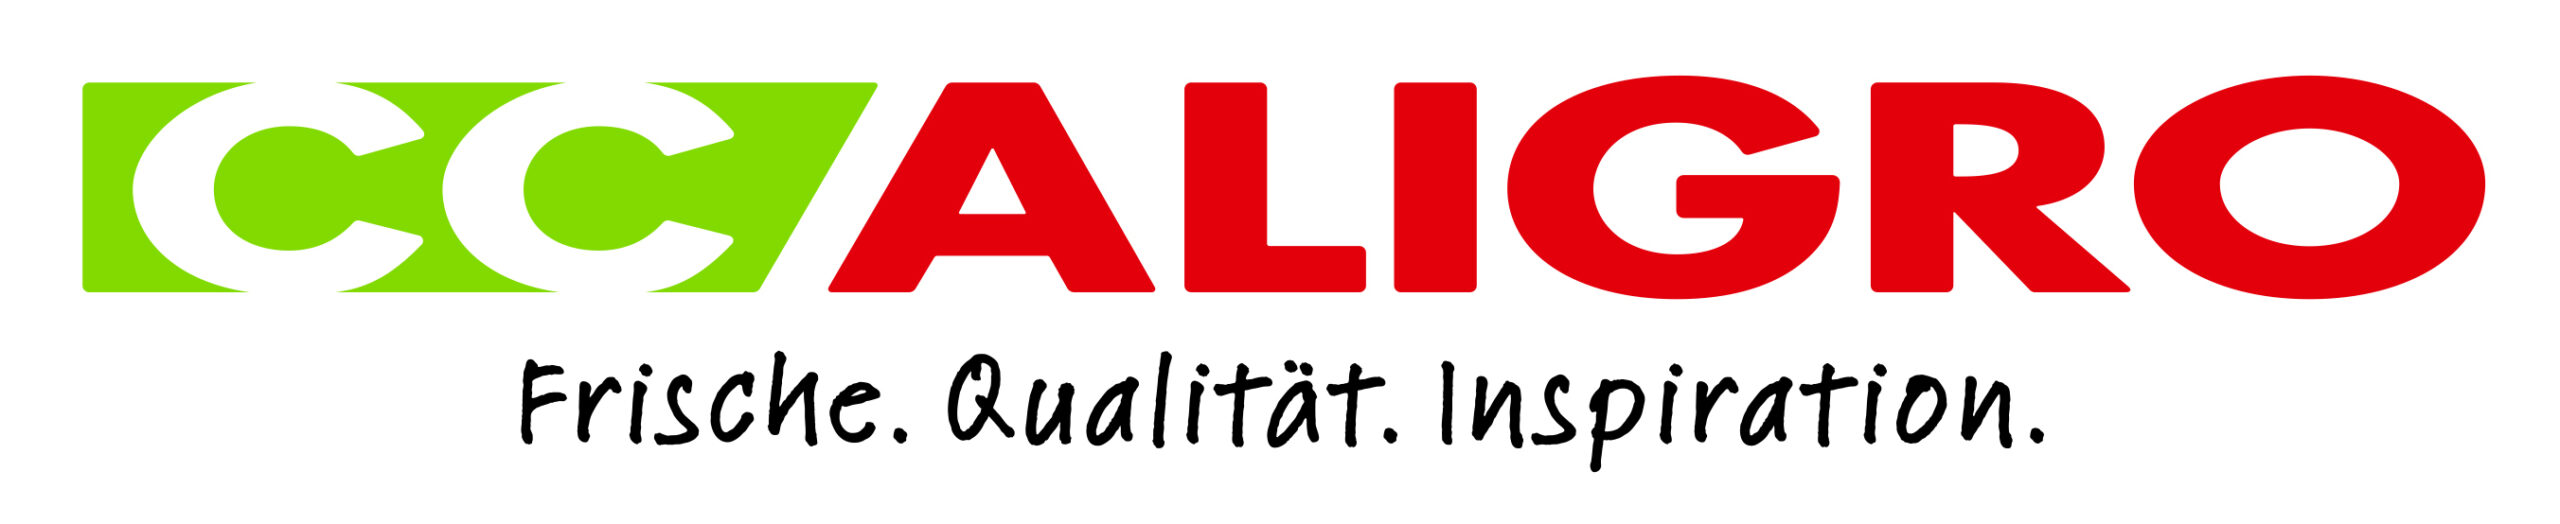 CCALIGRO Logo mit Claim, RGB